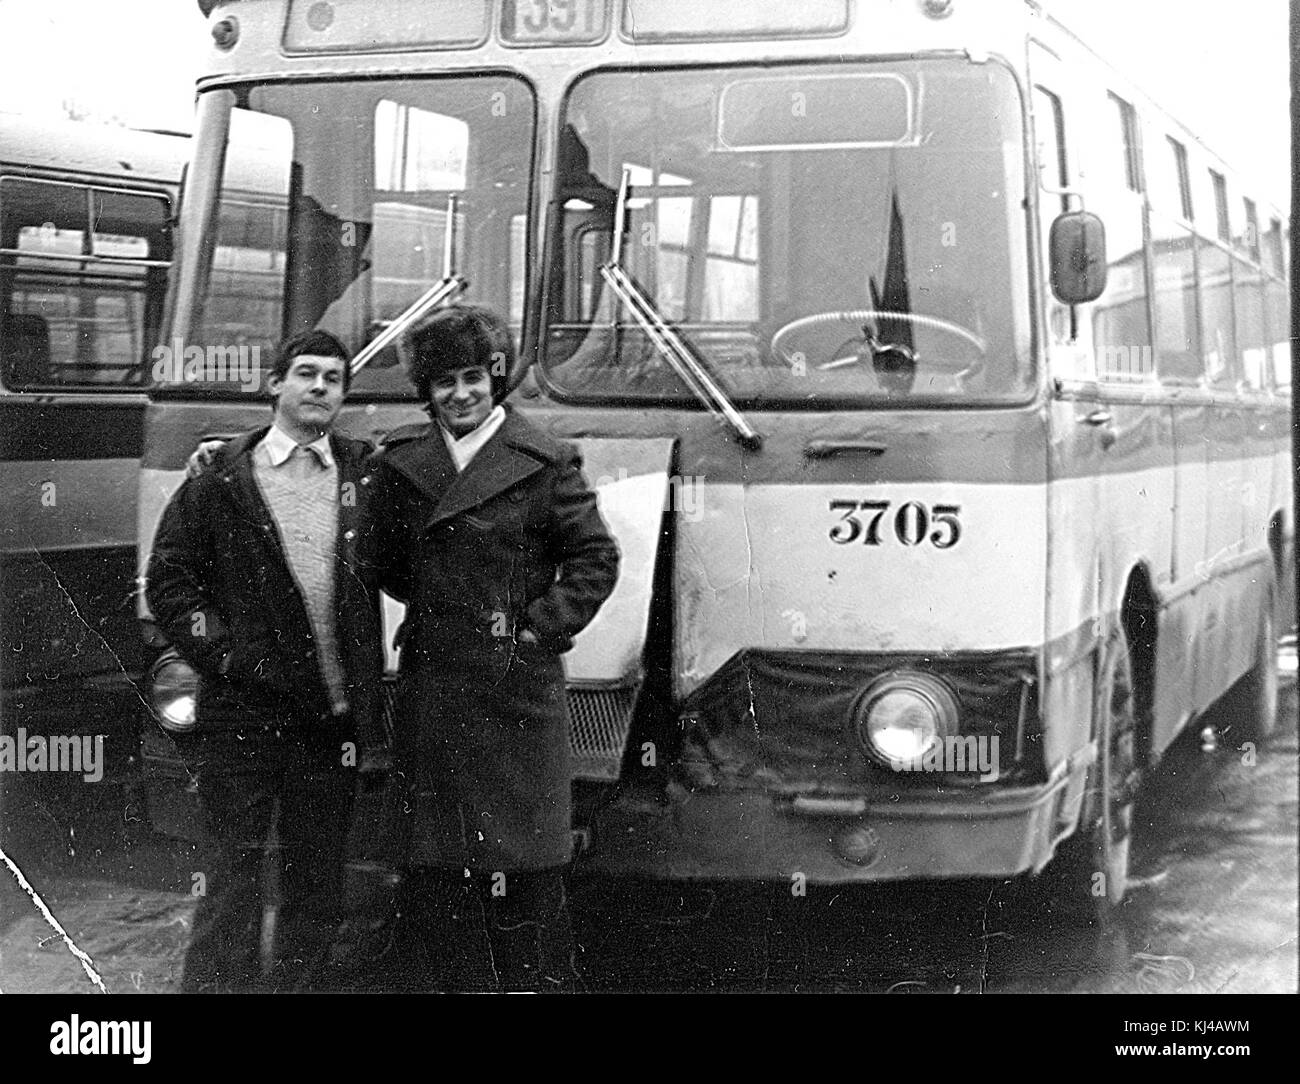 Kolpino Bus Park Anatoly Alexander LiAZ-677 park3 column7 1985 Stock Photo